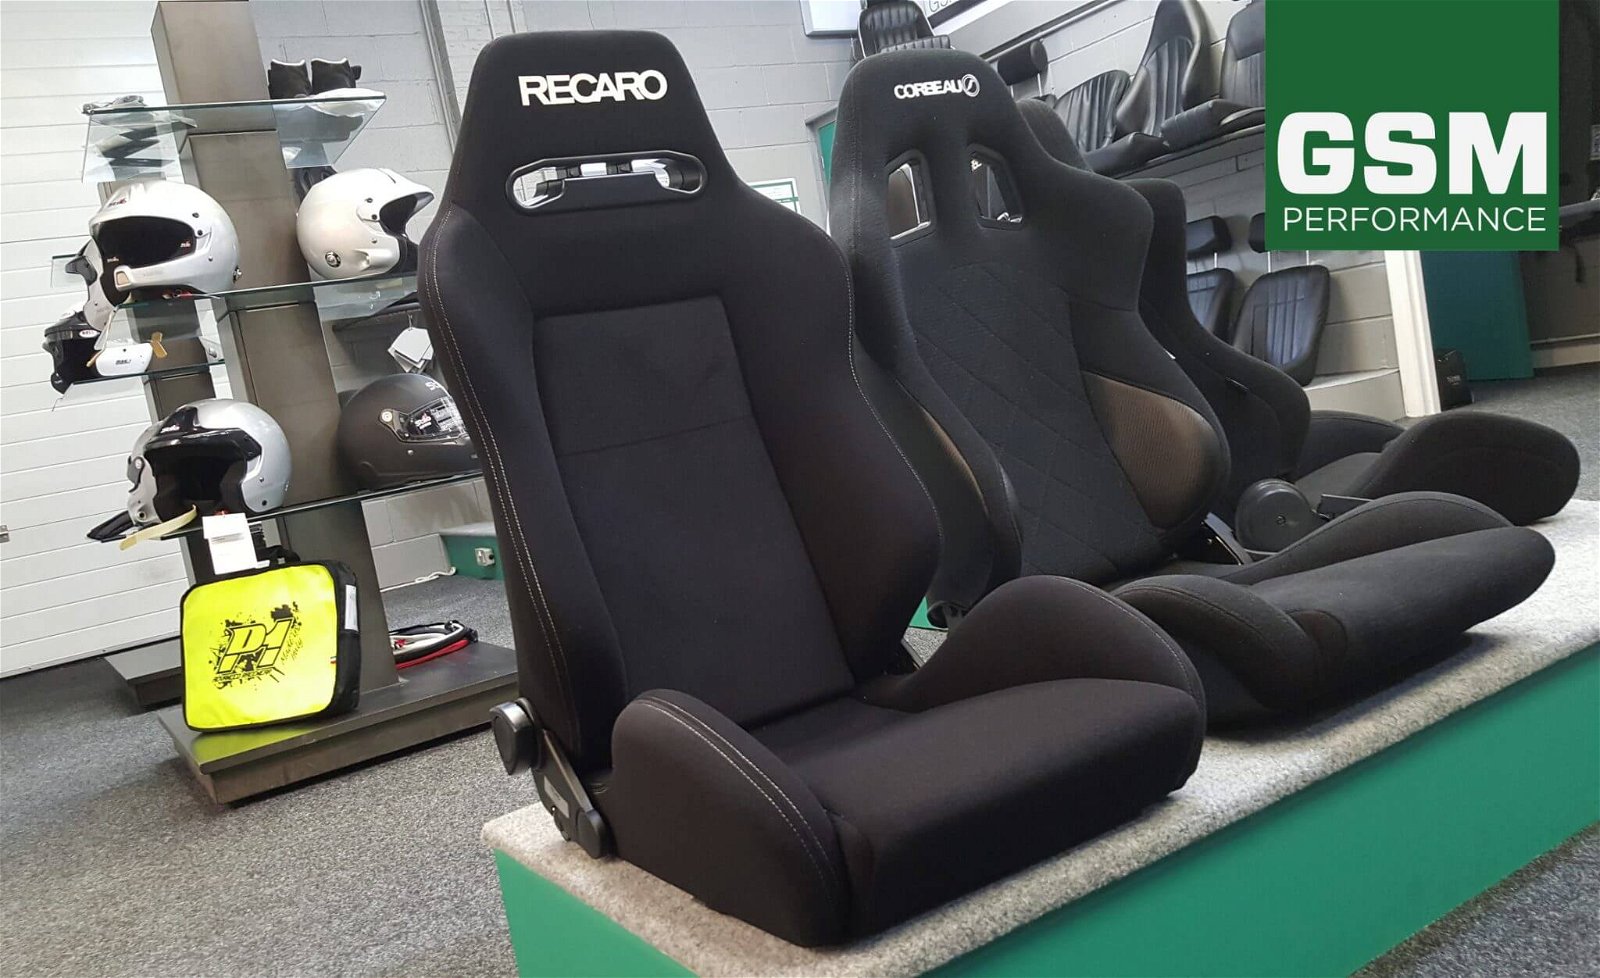 Recaro Speed sport seats